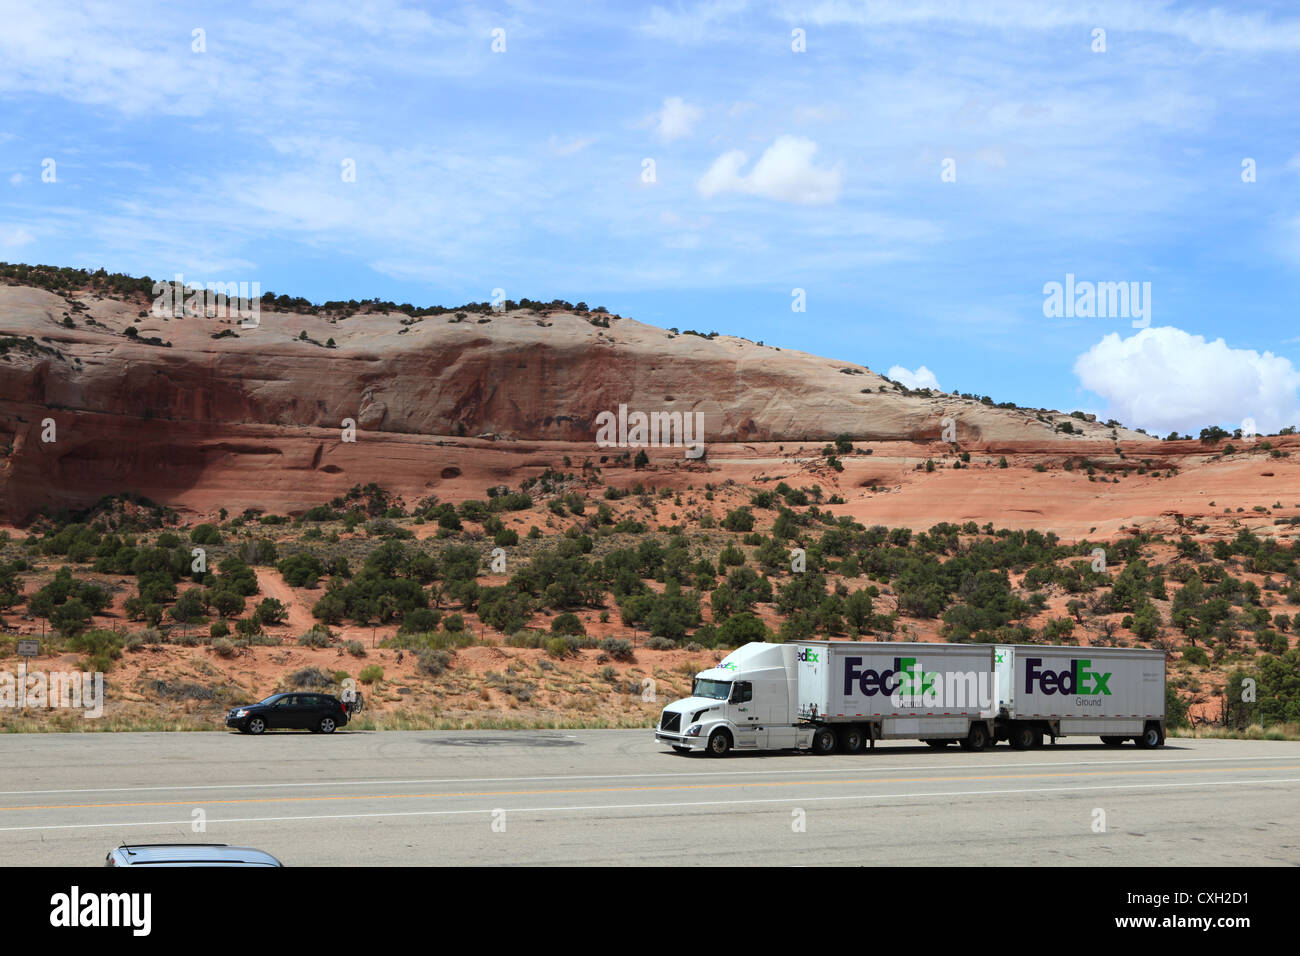 Fedex truck on highway in Moab, Utah, US Stock Photo